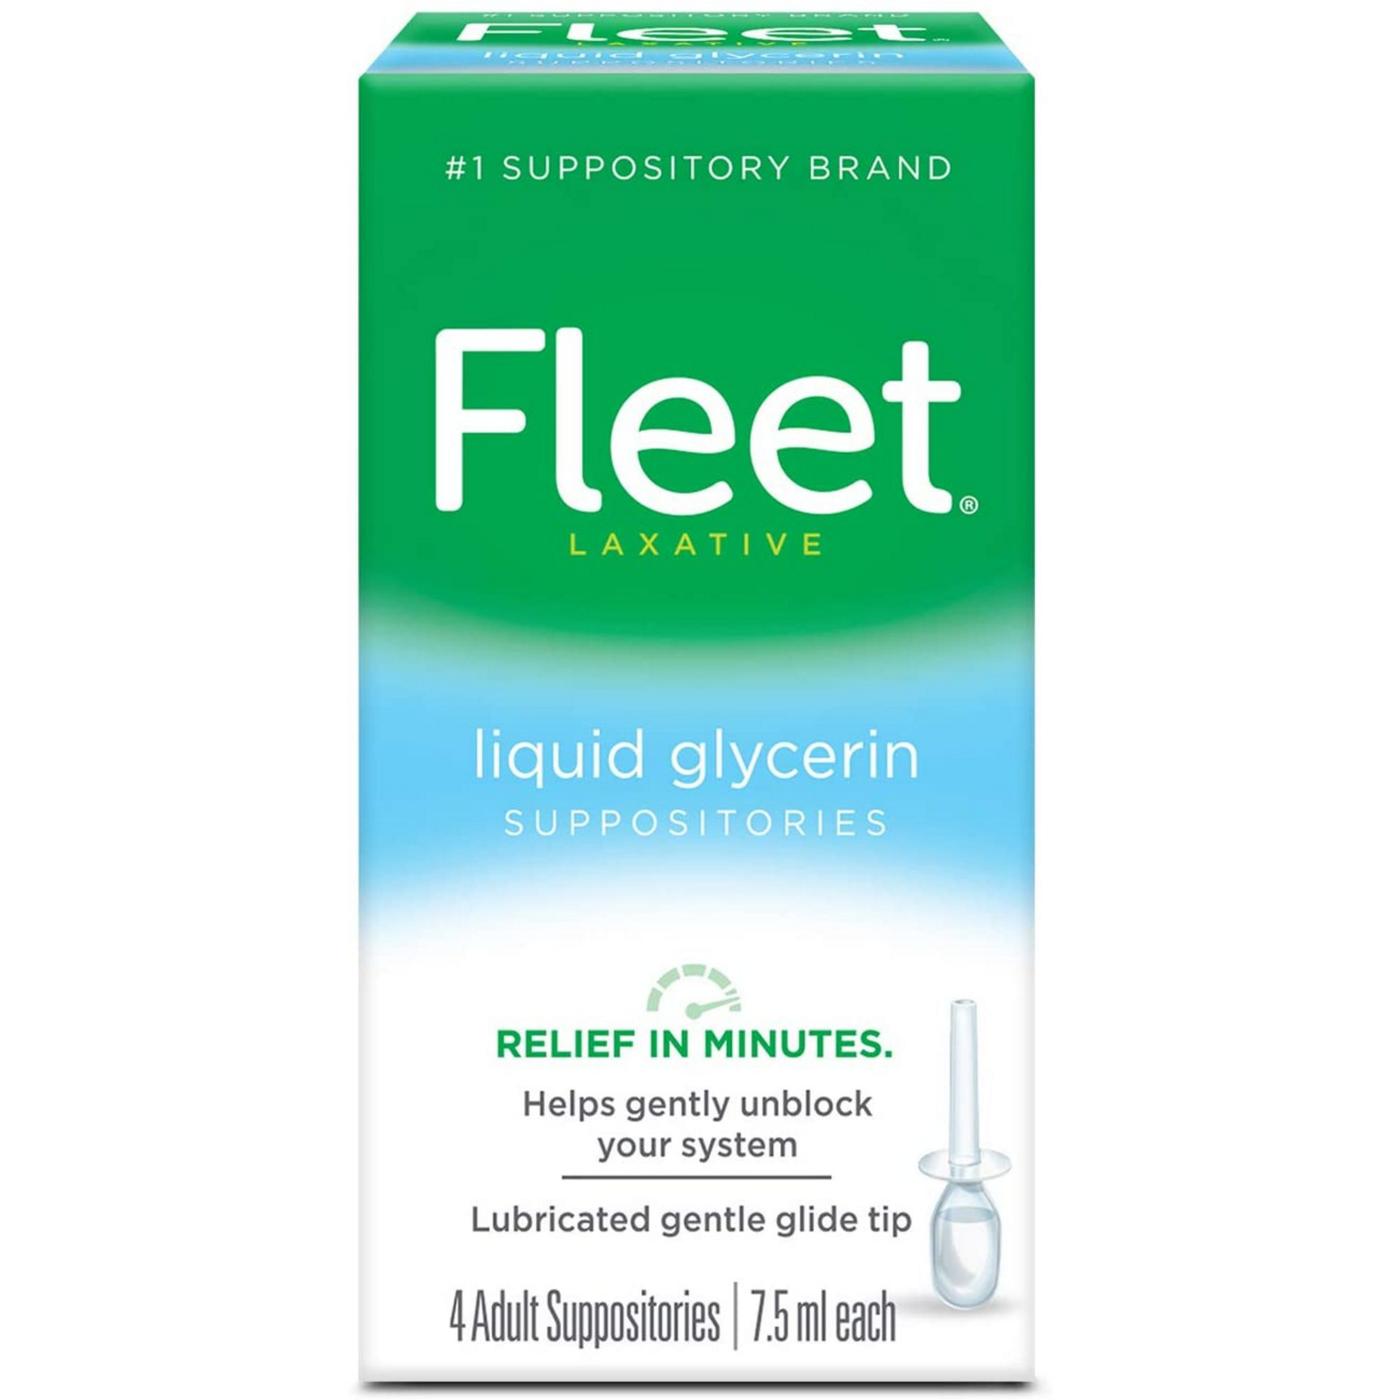 Fleet Liquid Glycerin Suppositories; image 1 of 5